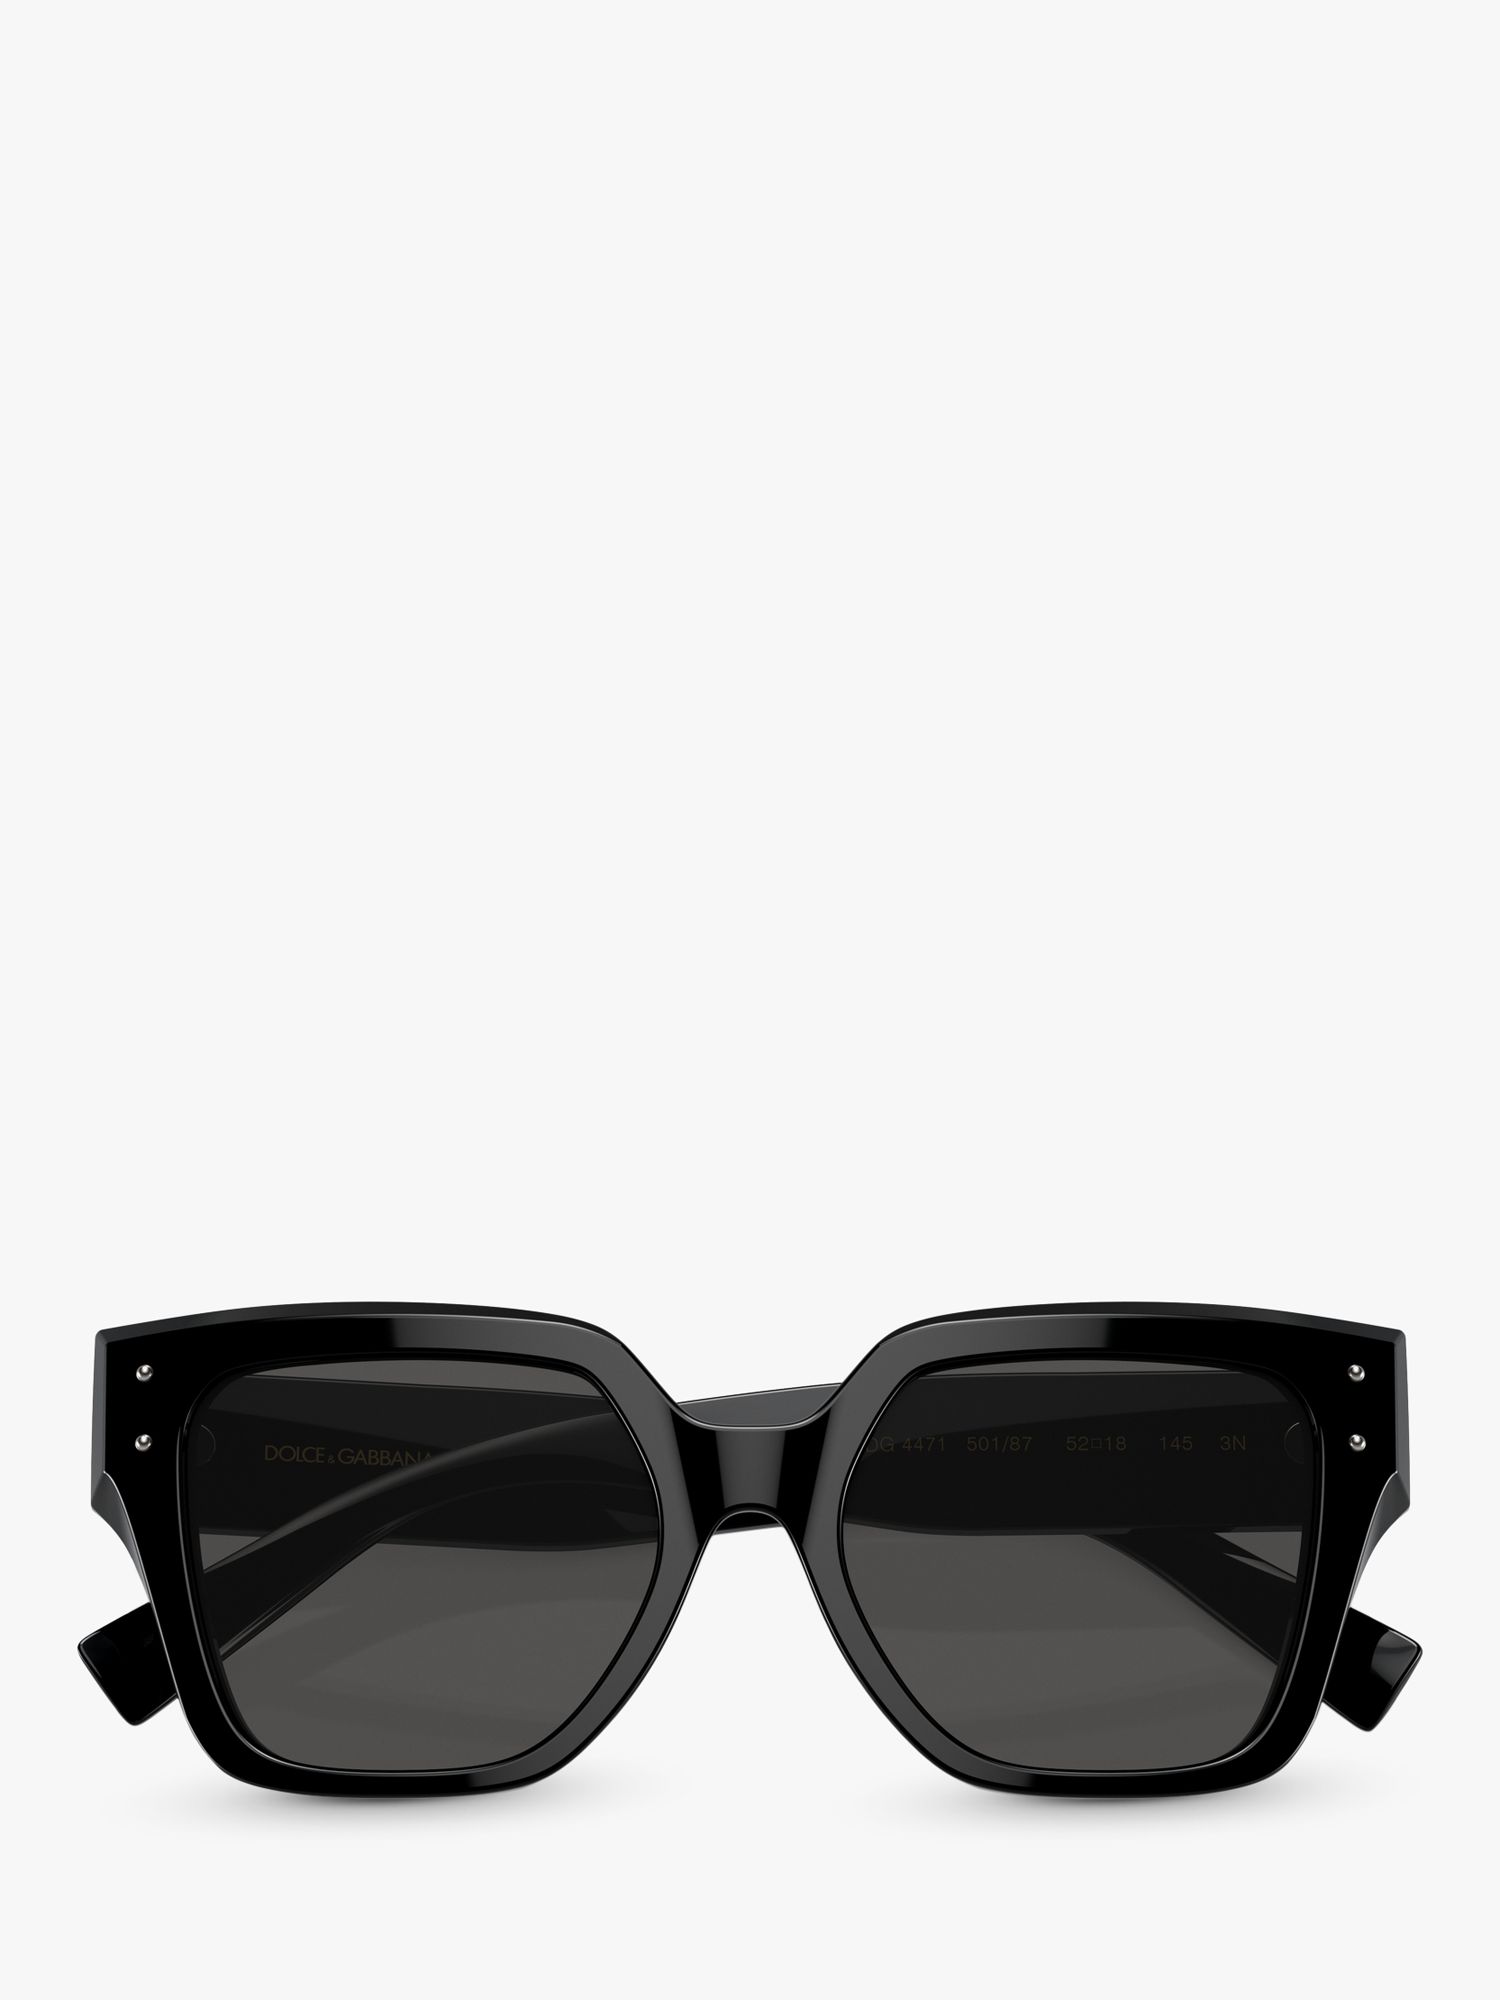 Dolce & Gabbana DG4471 Women's Rectangular Sunglasses, Black